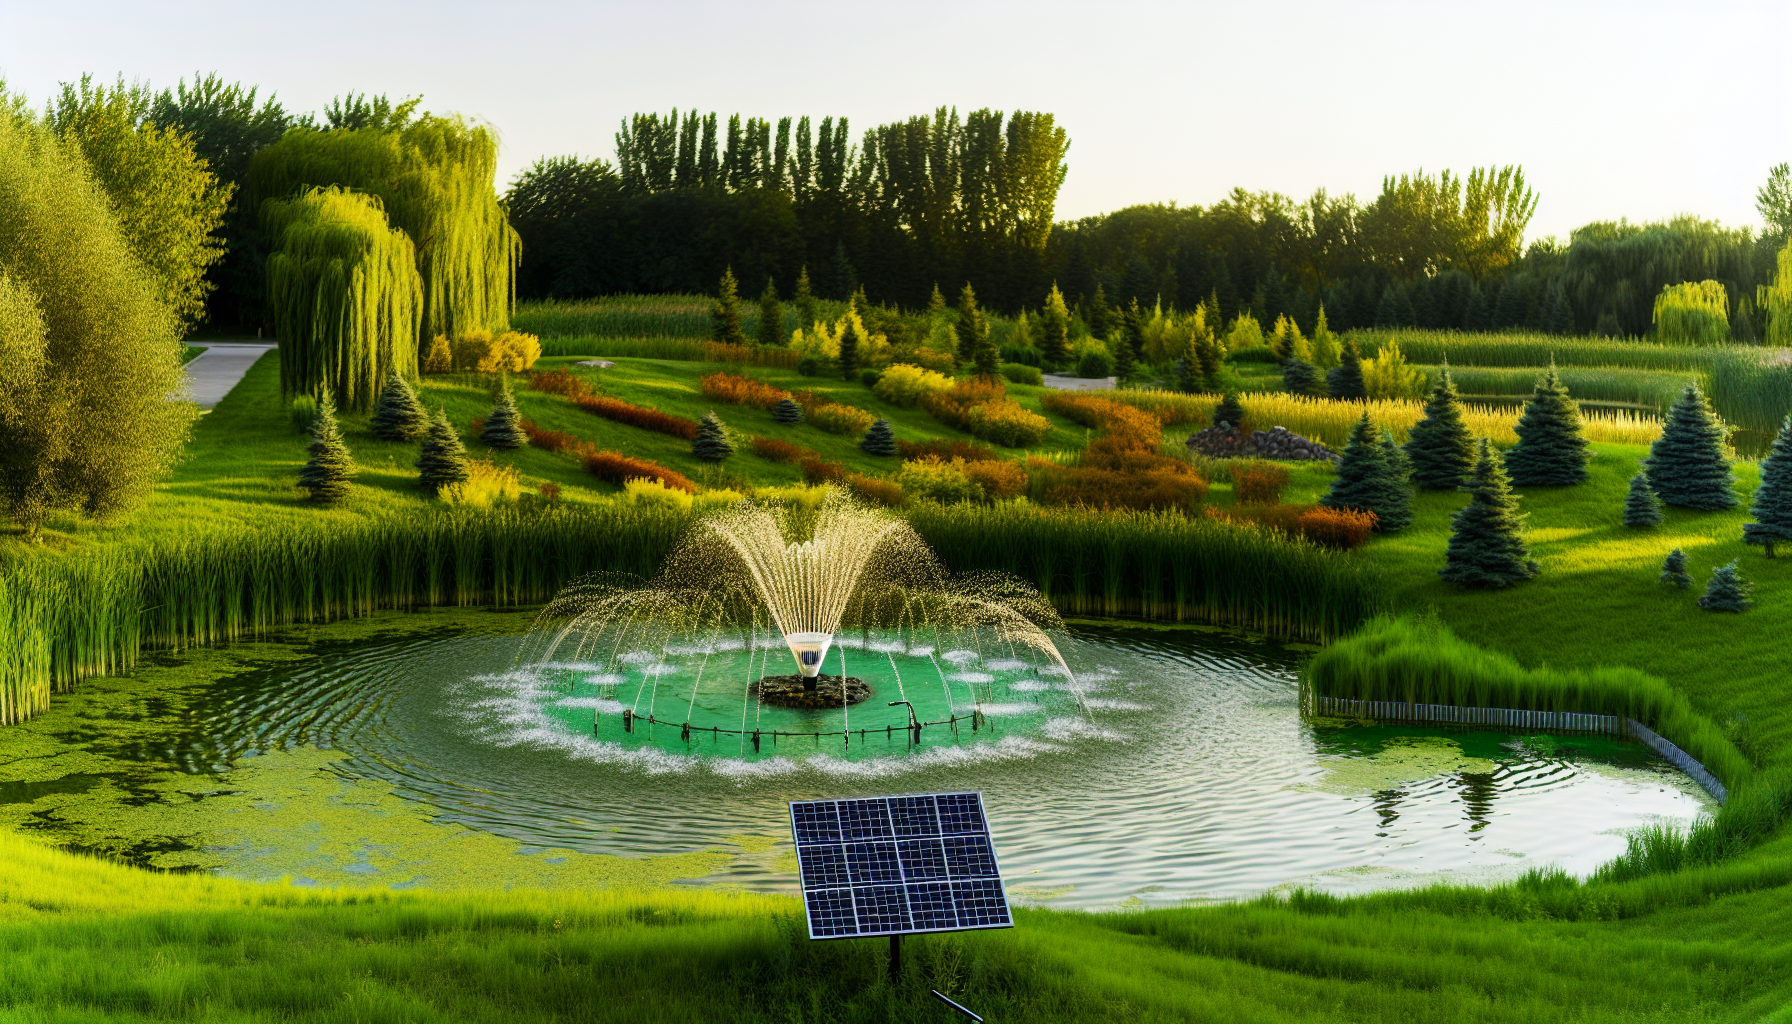 Solar panel powering a pond fountain